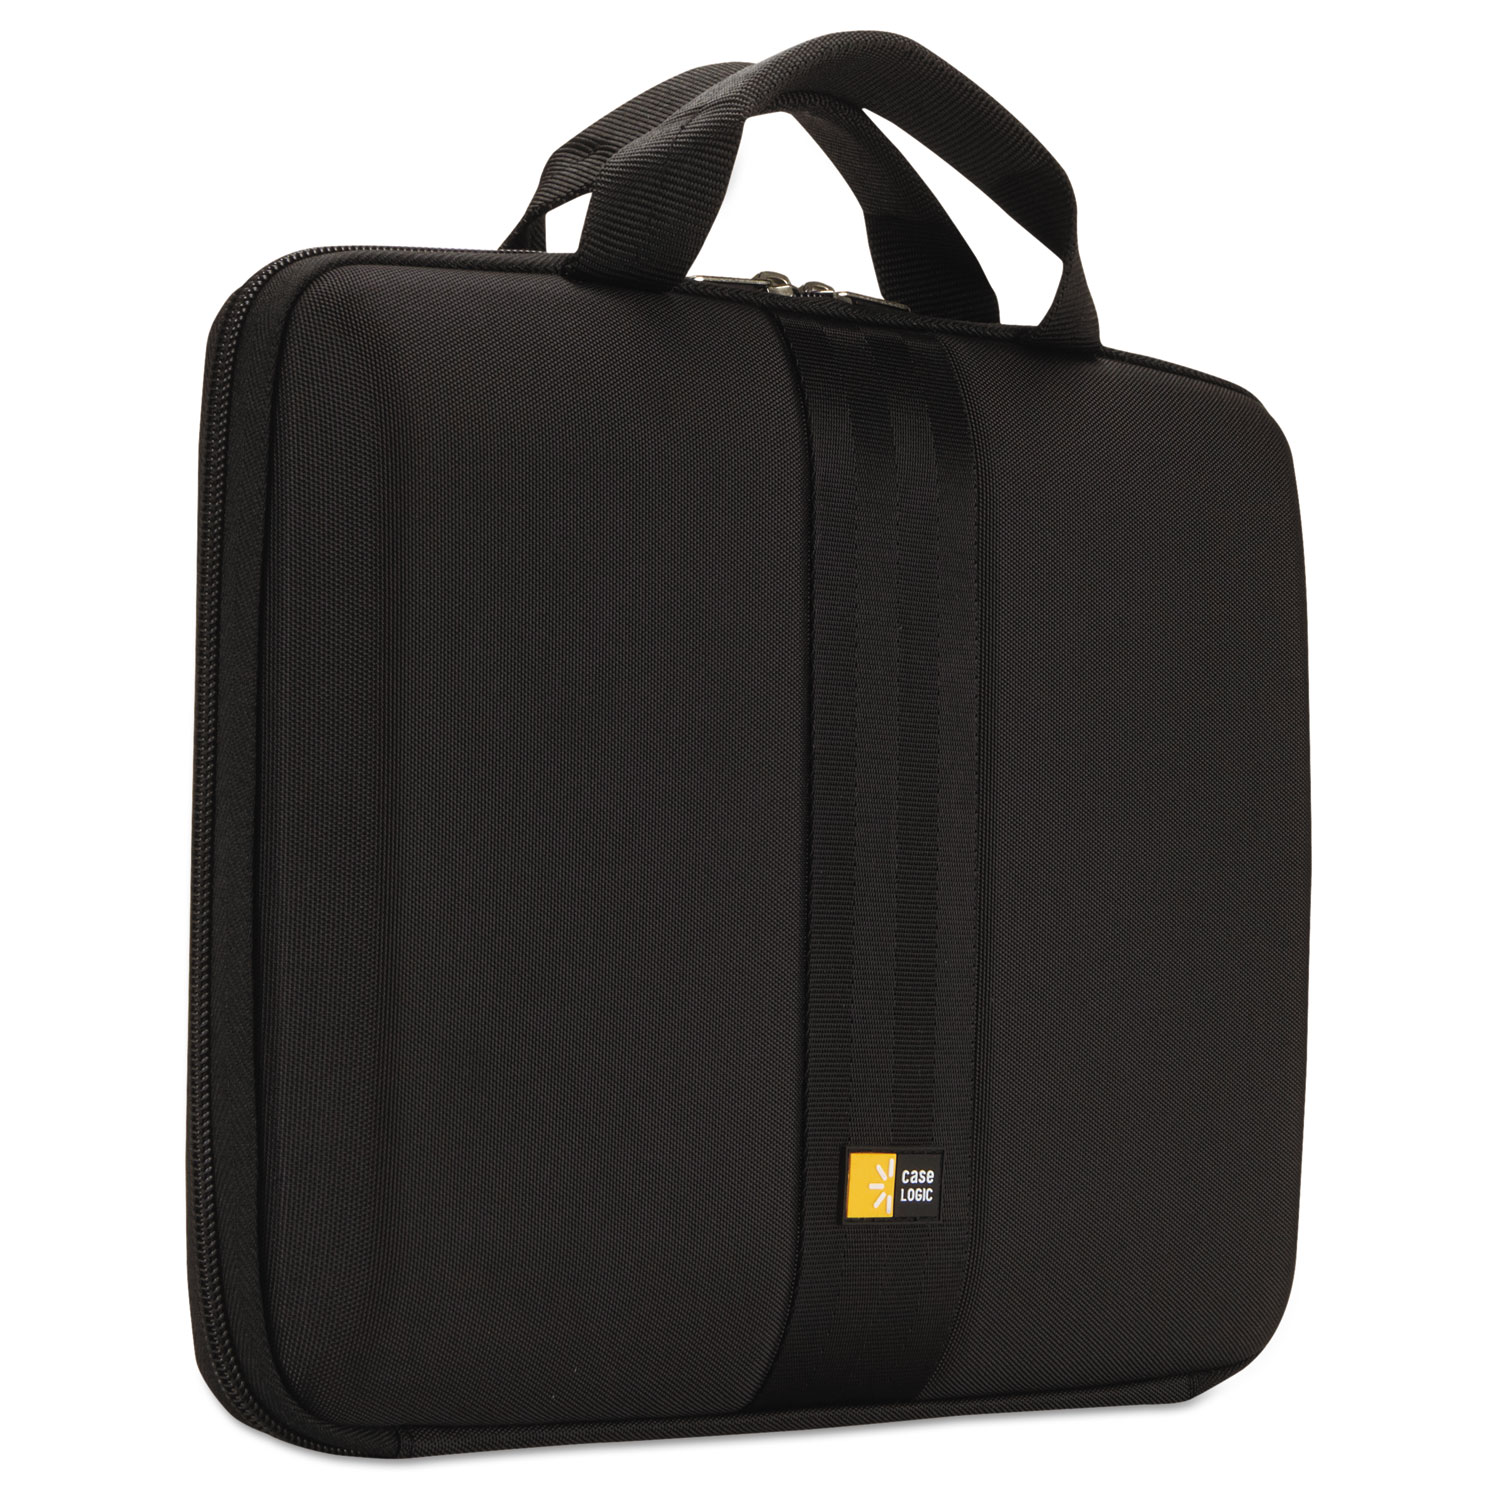  Case Logic 3201234 Laptop Sleeve for 11.6 Chromebook/Microsoft Surface, 13 x 1 3/4 x 10 1/4, Black (CLG3201234) 